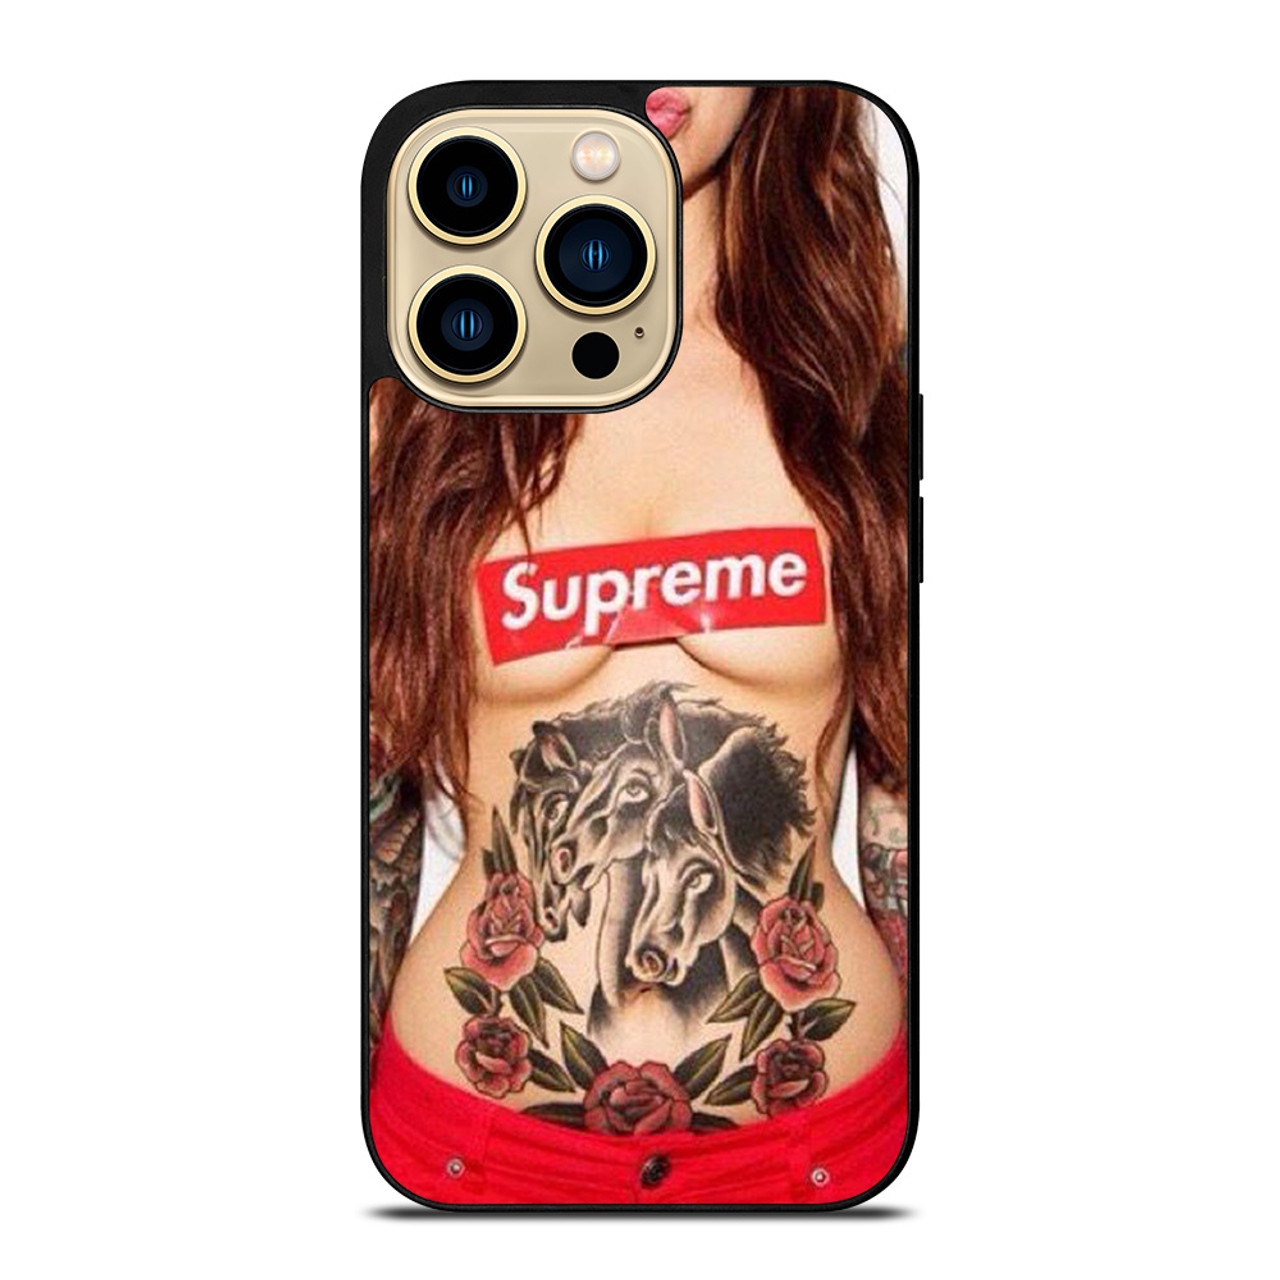 IPhone 11 Pro Max Case - Supreme Girl Back